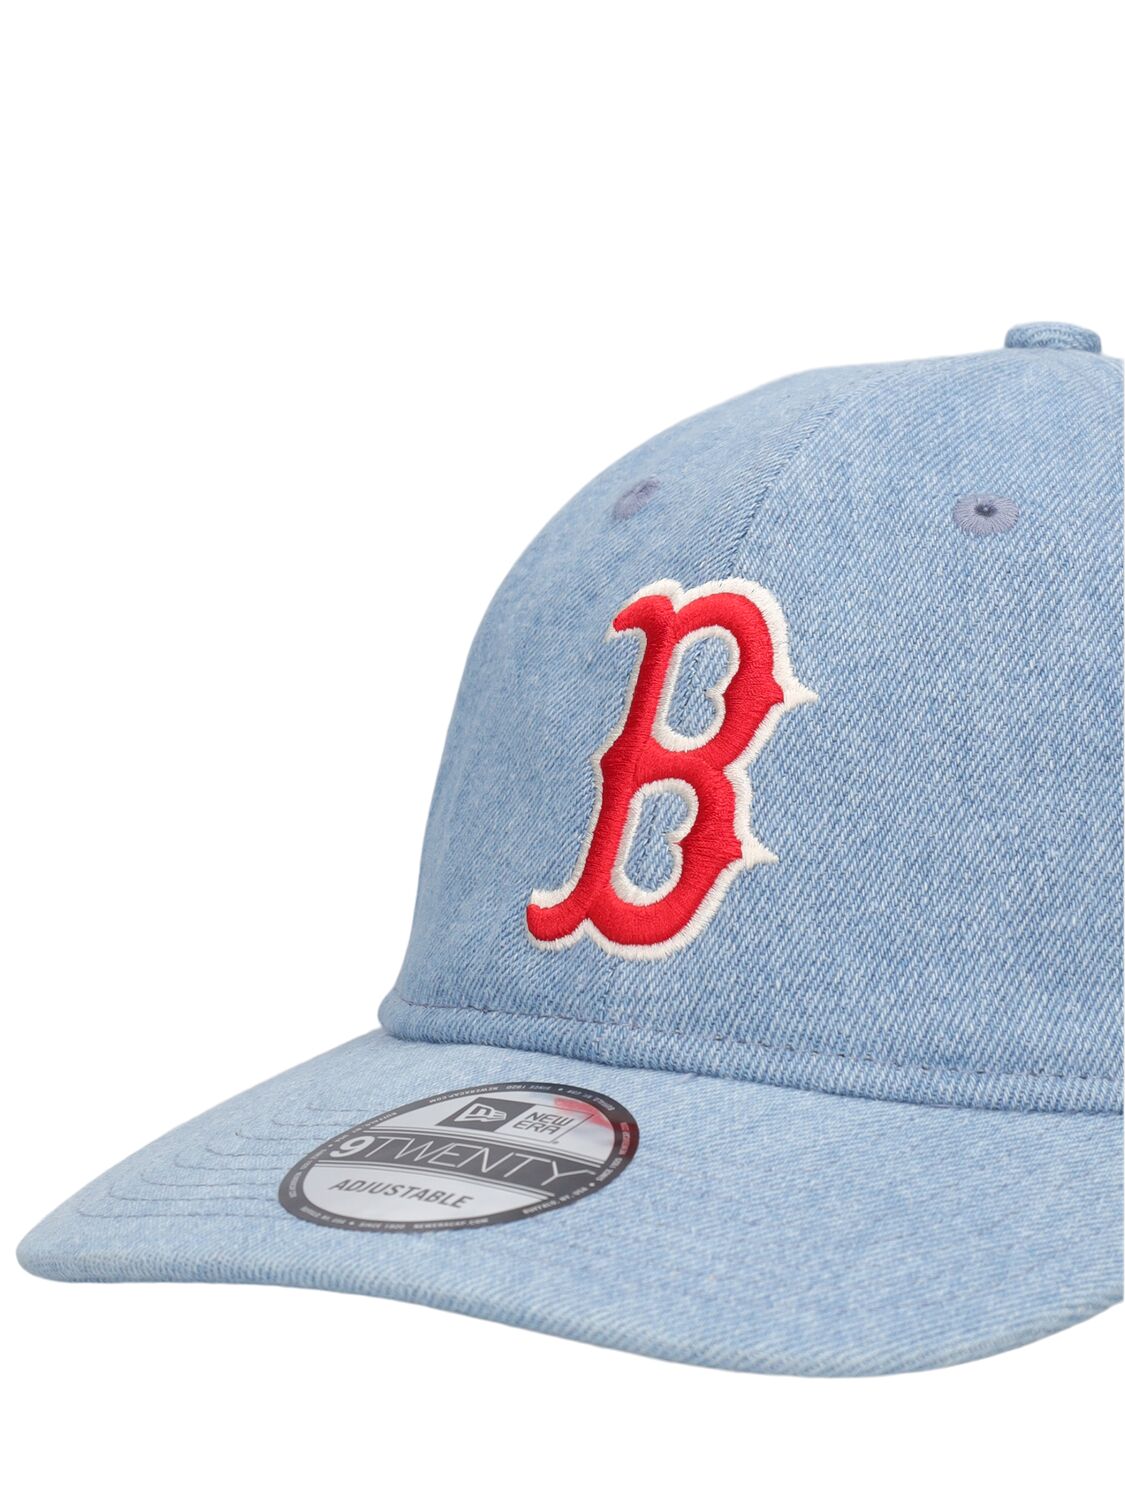 WASHED DENIM BOSTON RED SOX棒球帽